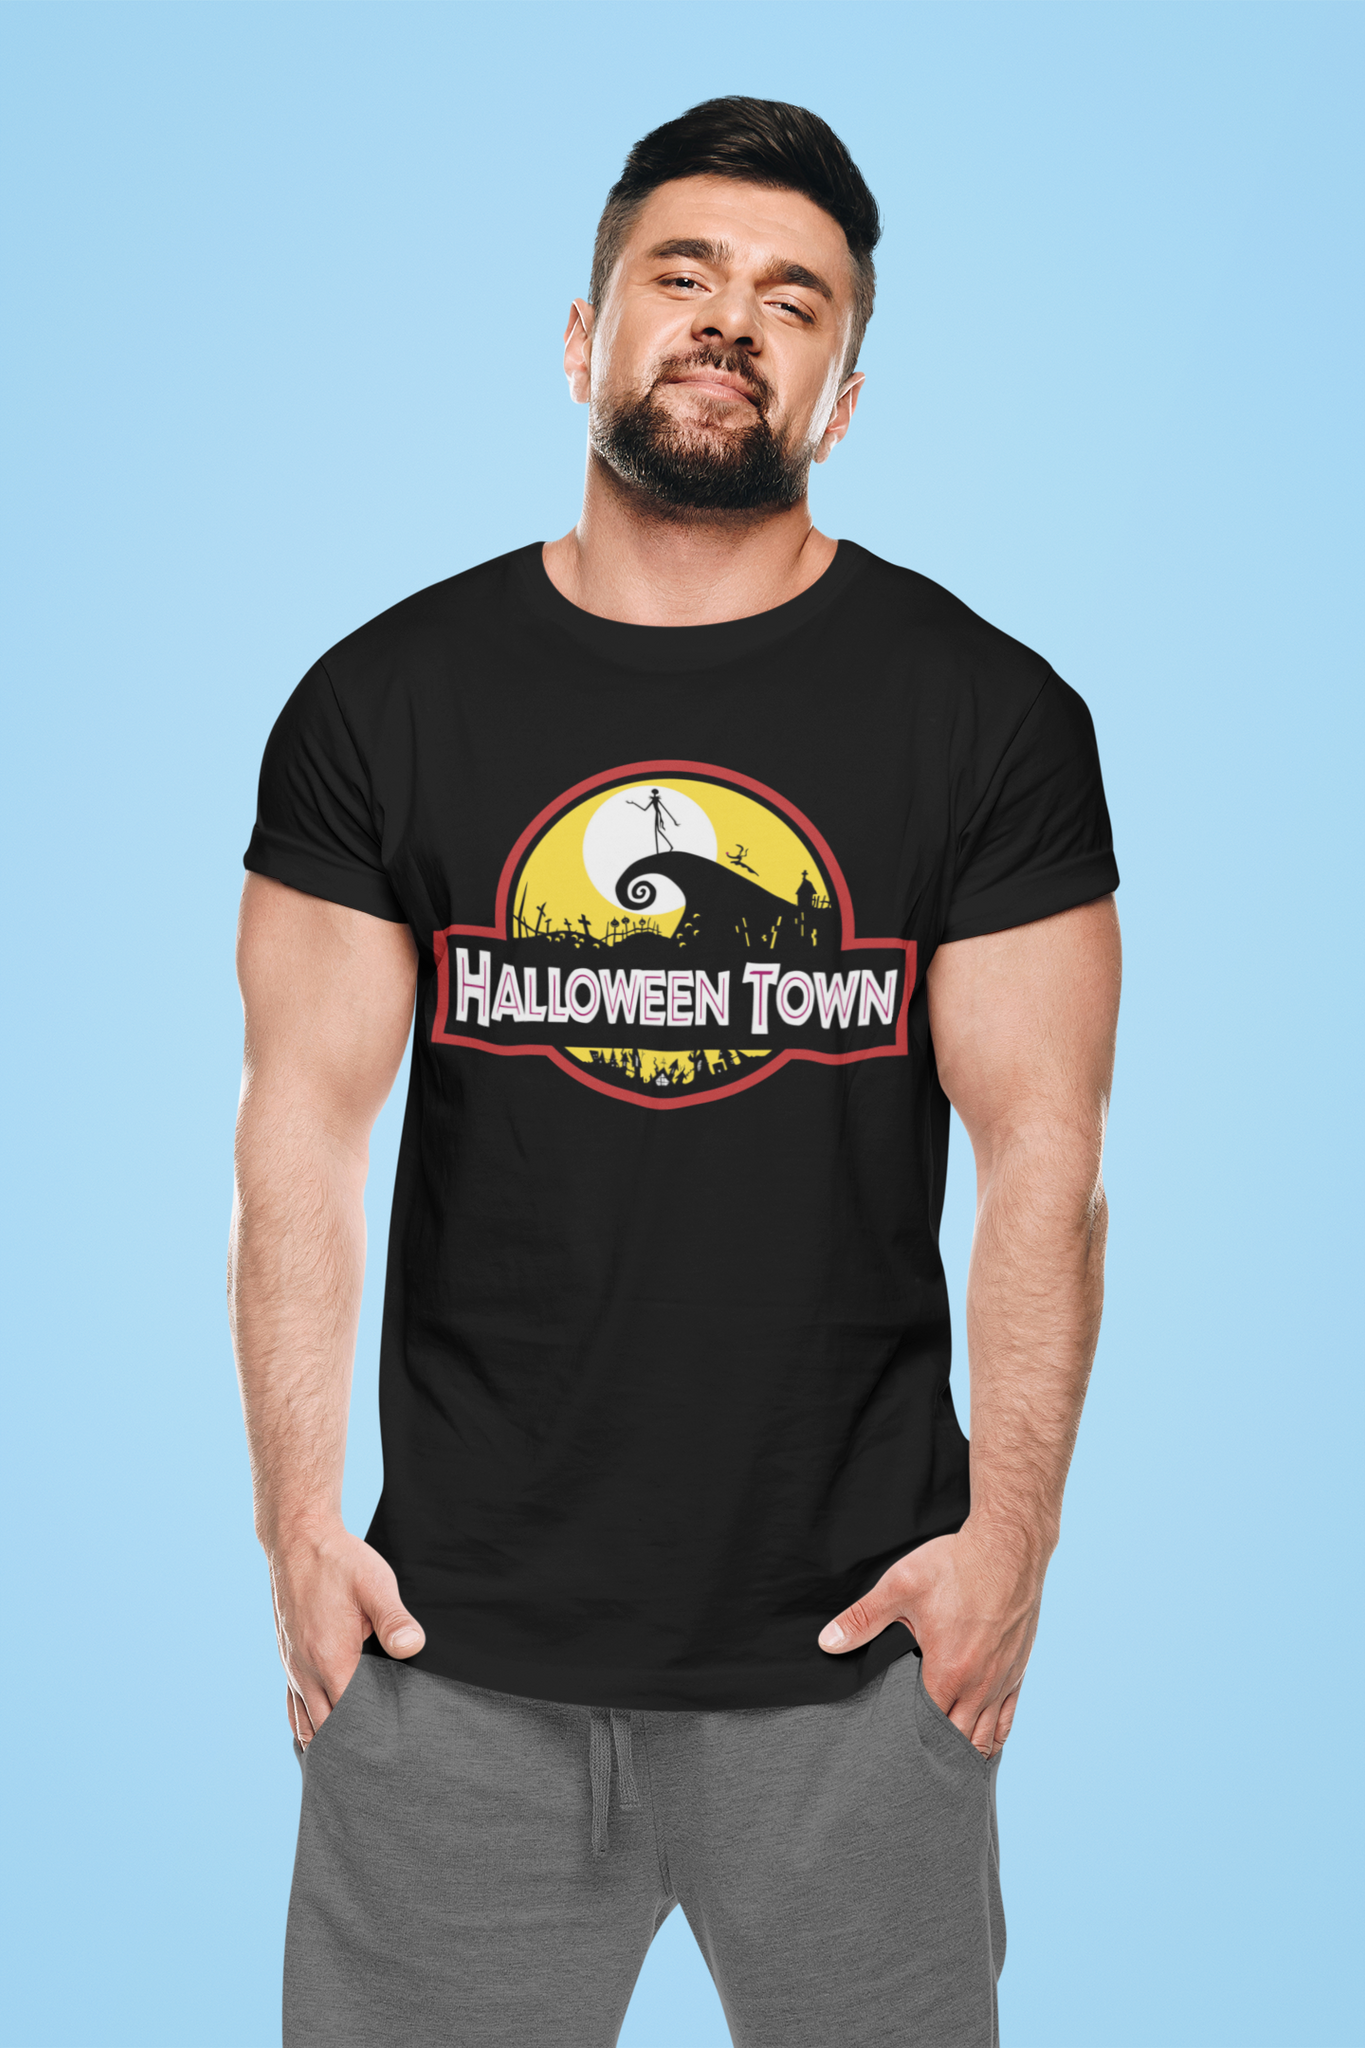 Nightmare Before Christmas T Shirt, Halloween Town Tshirt, Jack Skellington T Shirt, Halloween Gifts